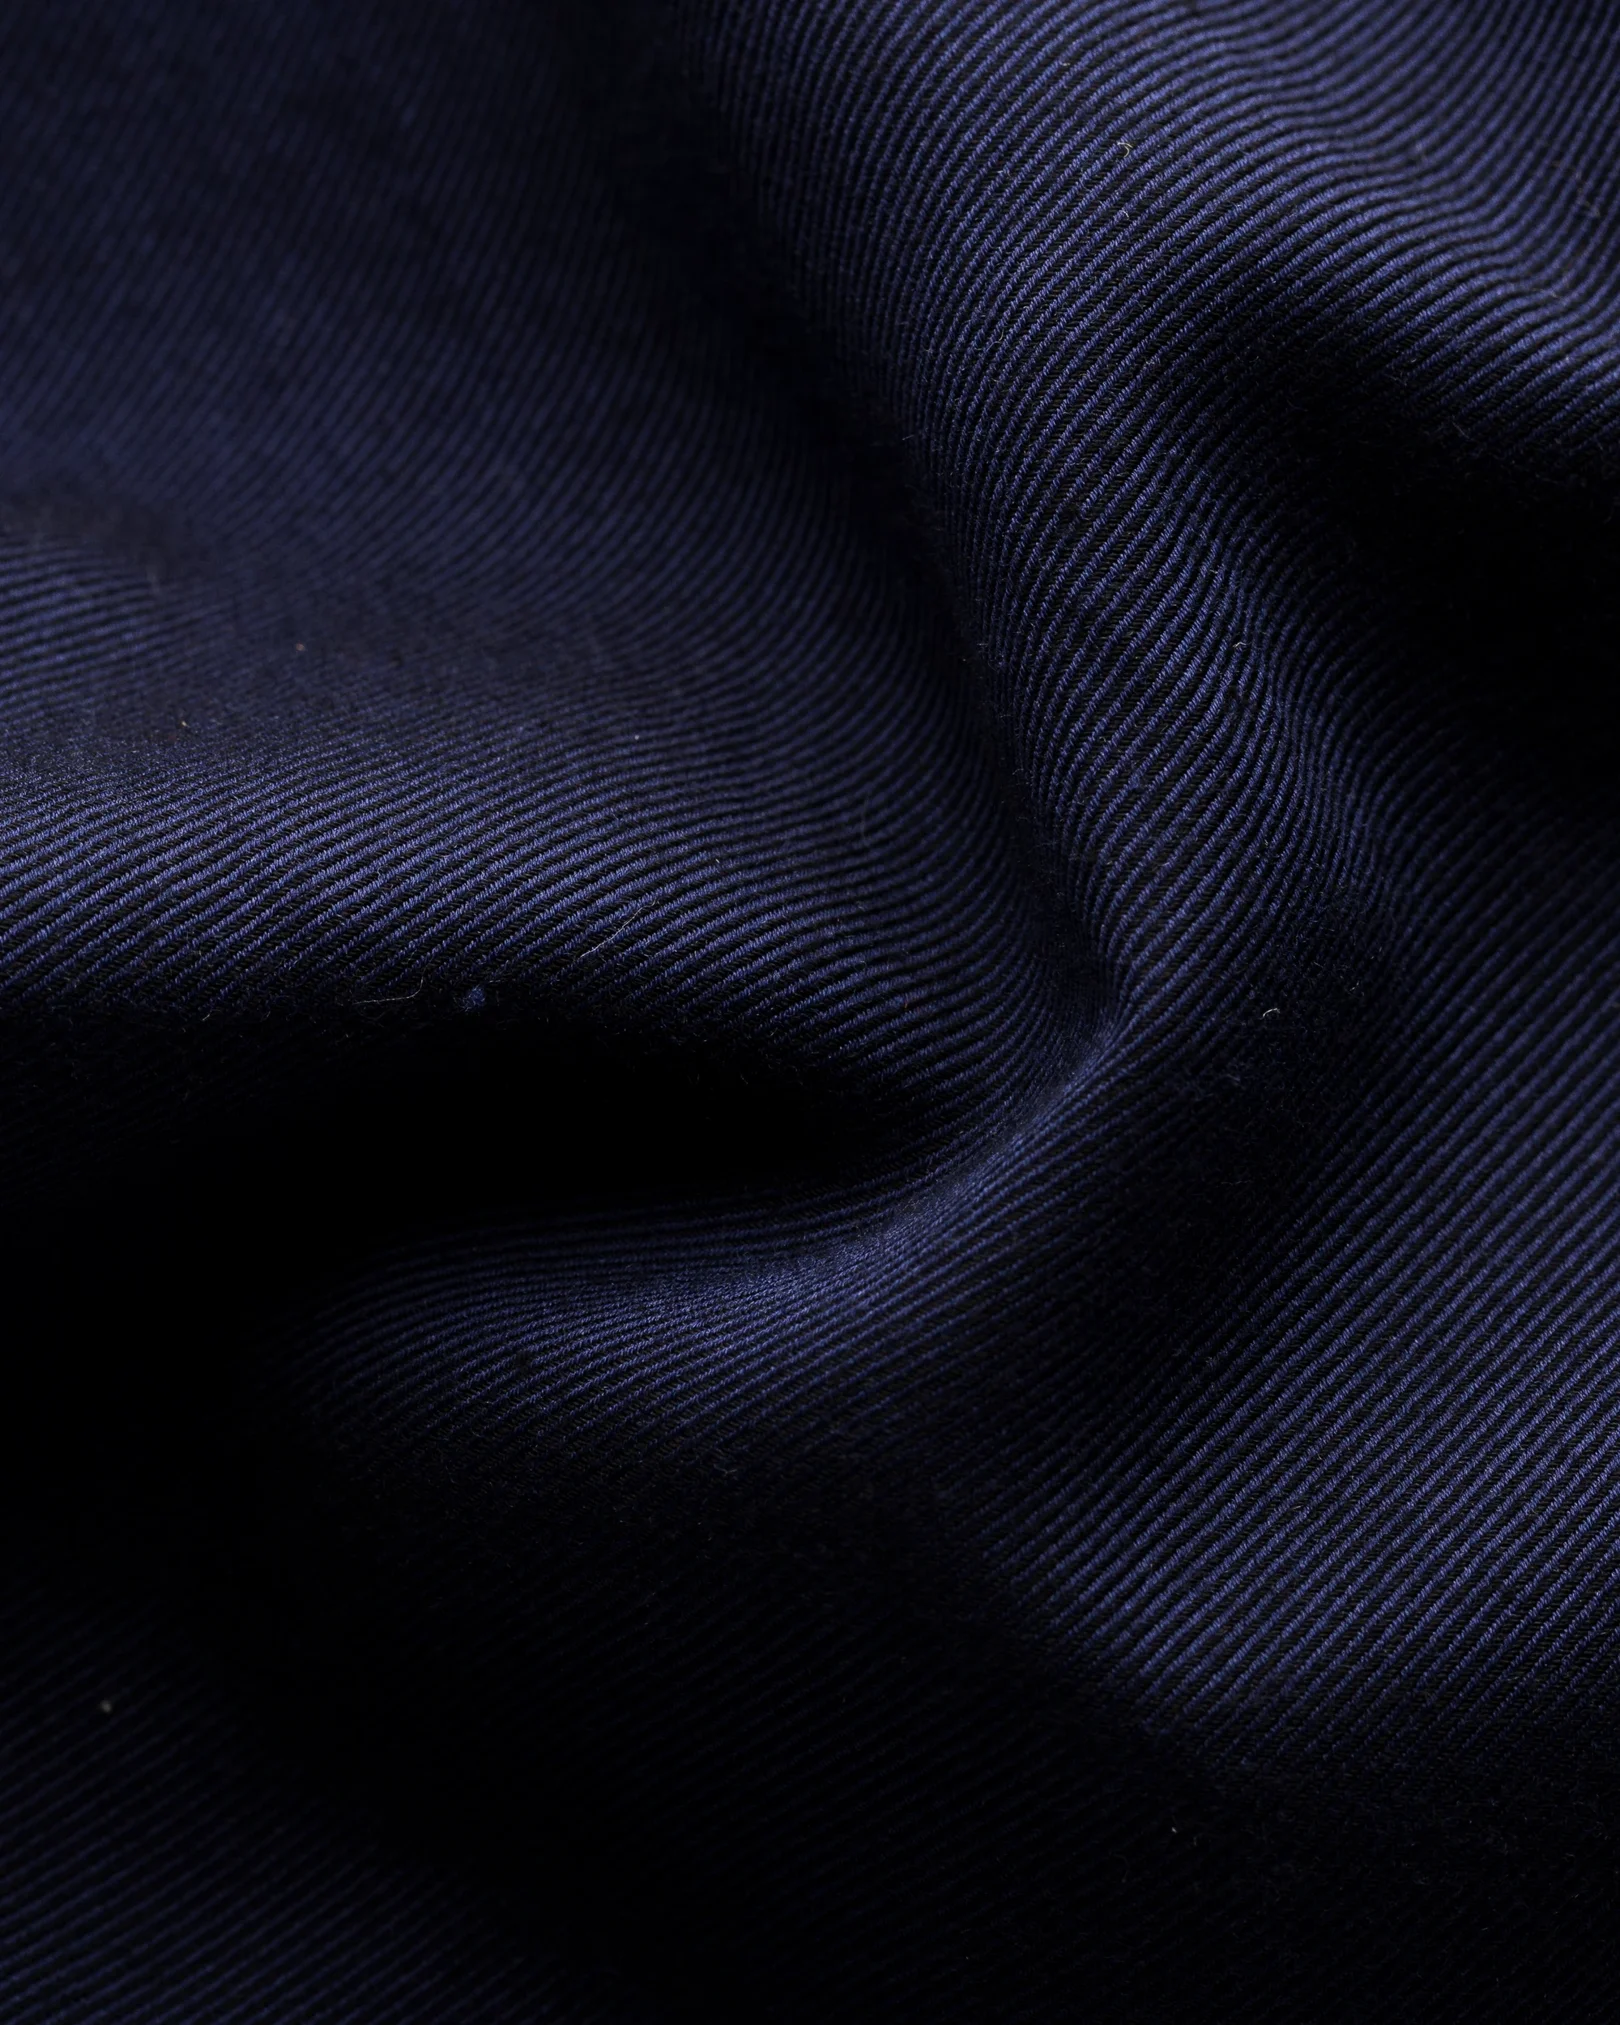 Eton - dark blue cotton tencel tm shirt